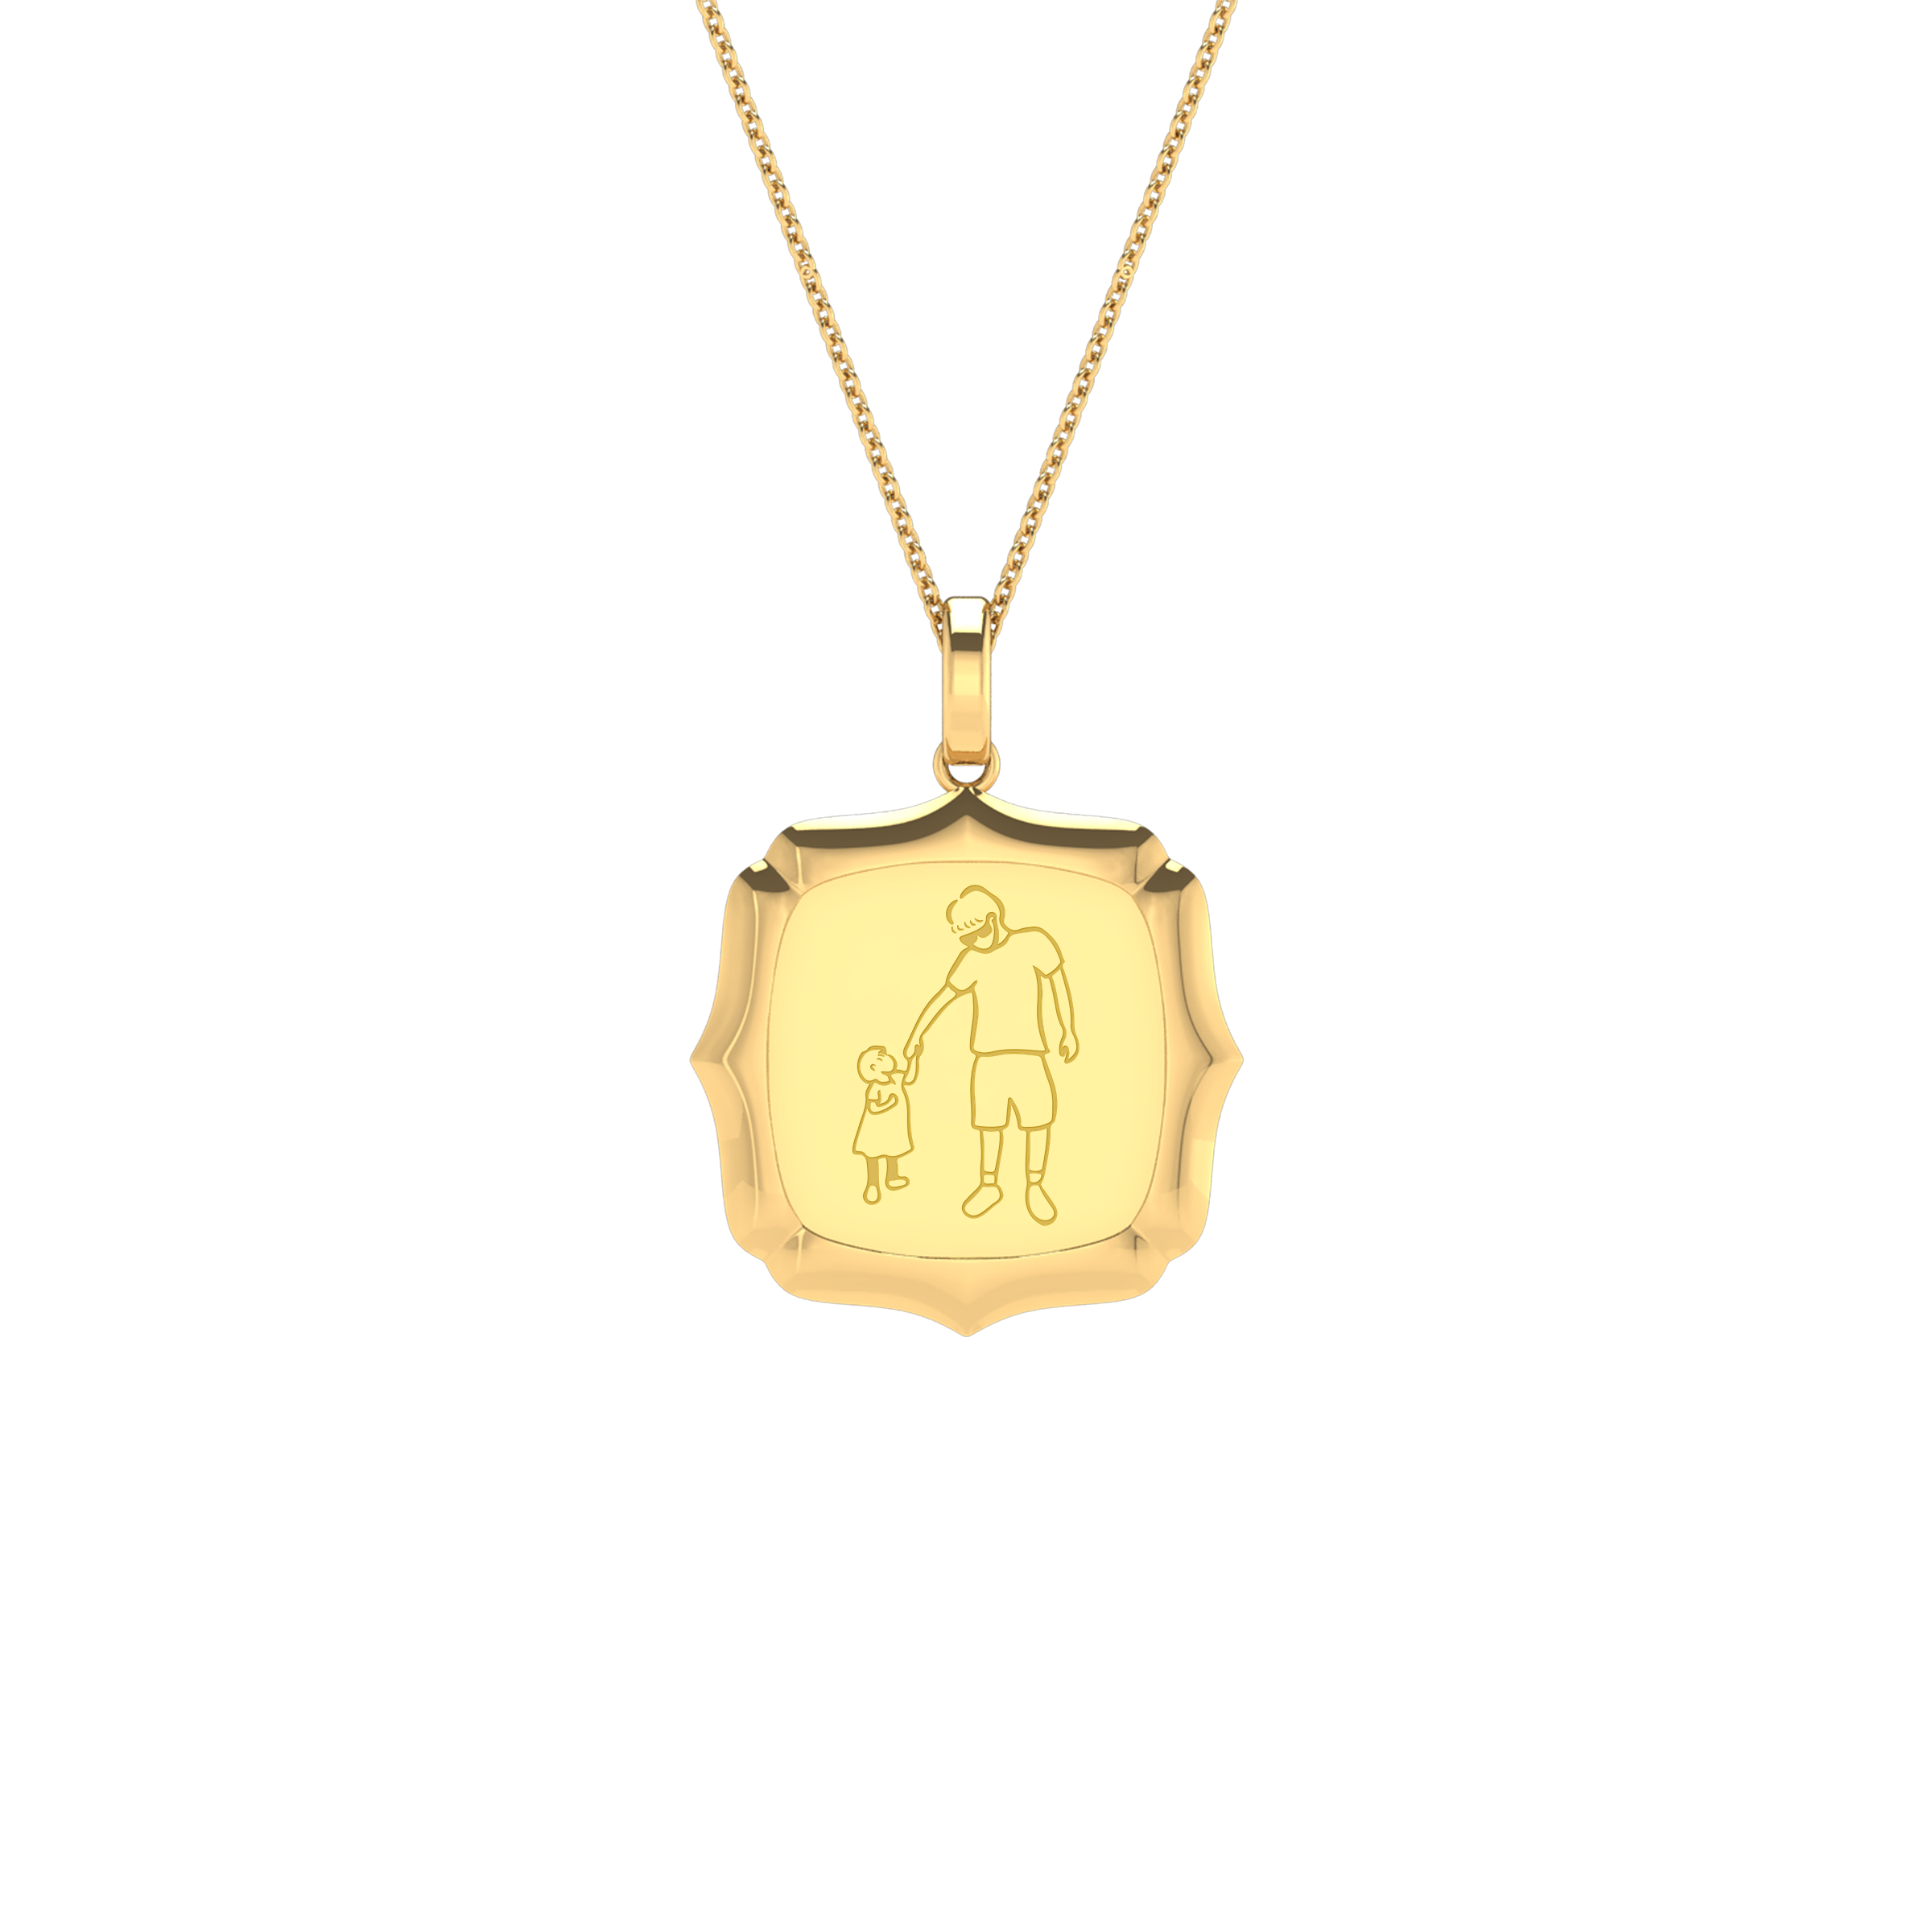 Affirmation Engraved Necklace in 18K Gold (To Have Gratitude)